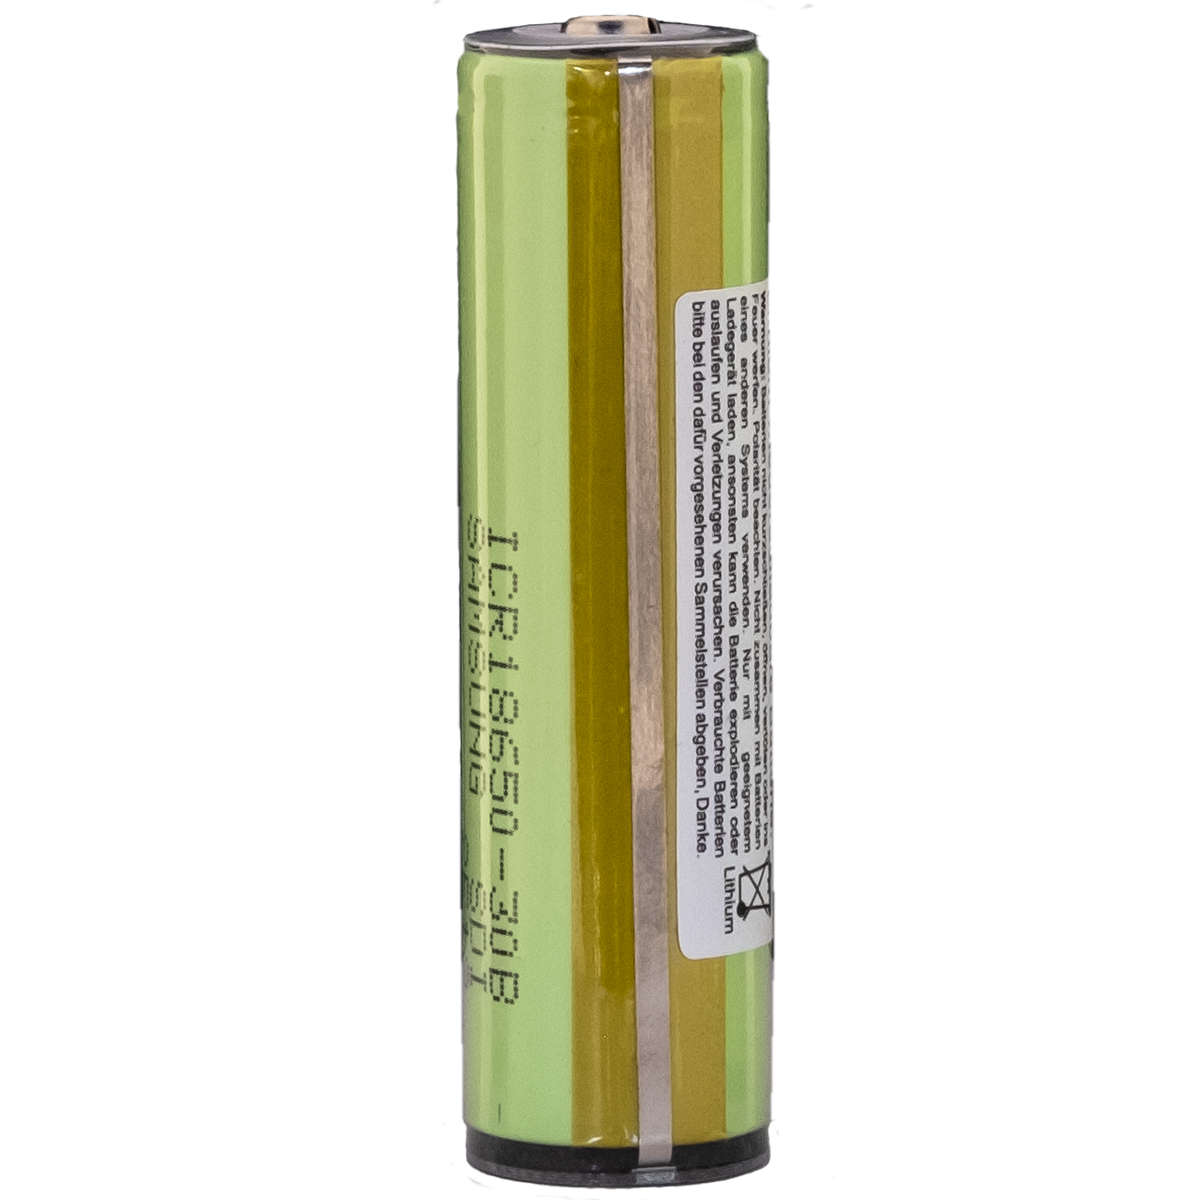 Samsung ICR18650-30B Li-Ion battery pcb protected